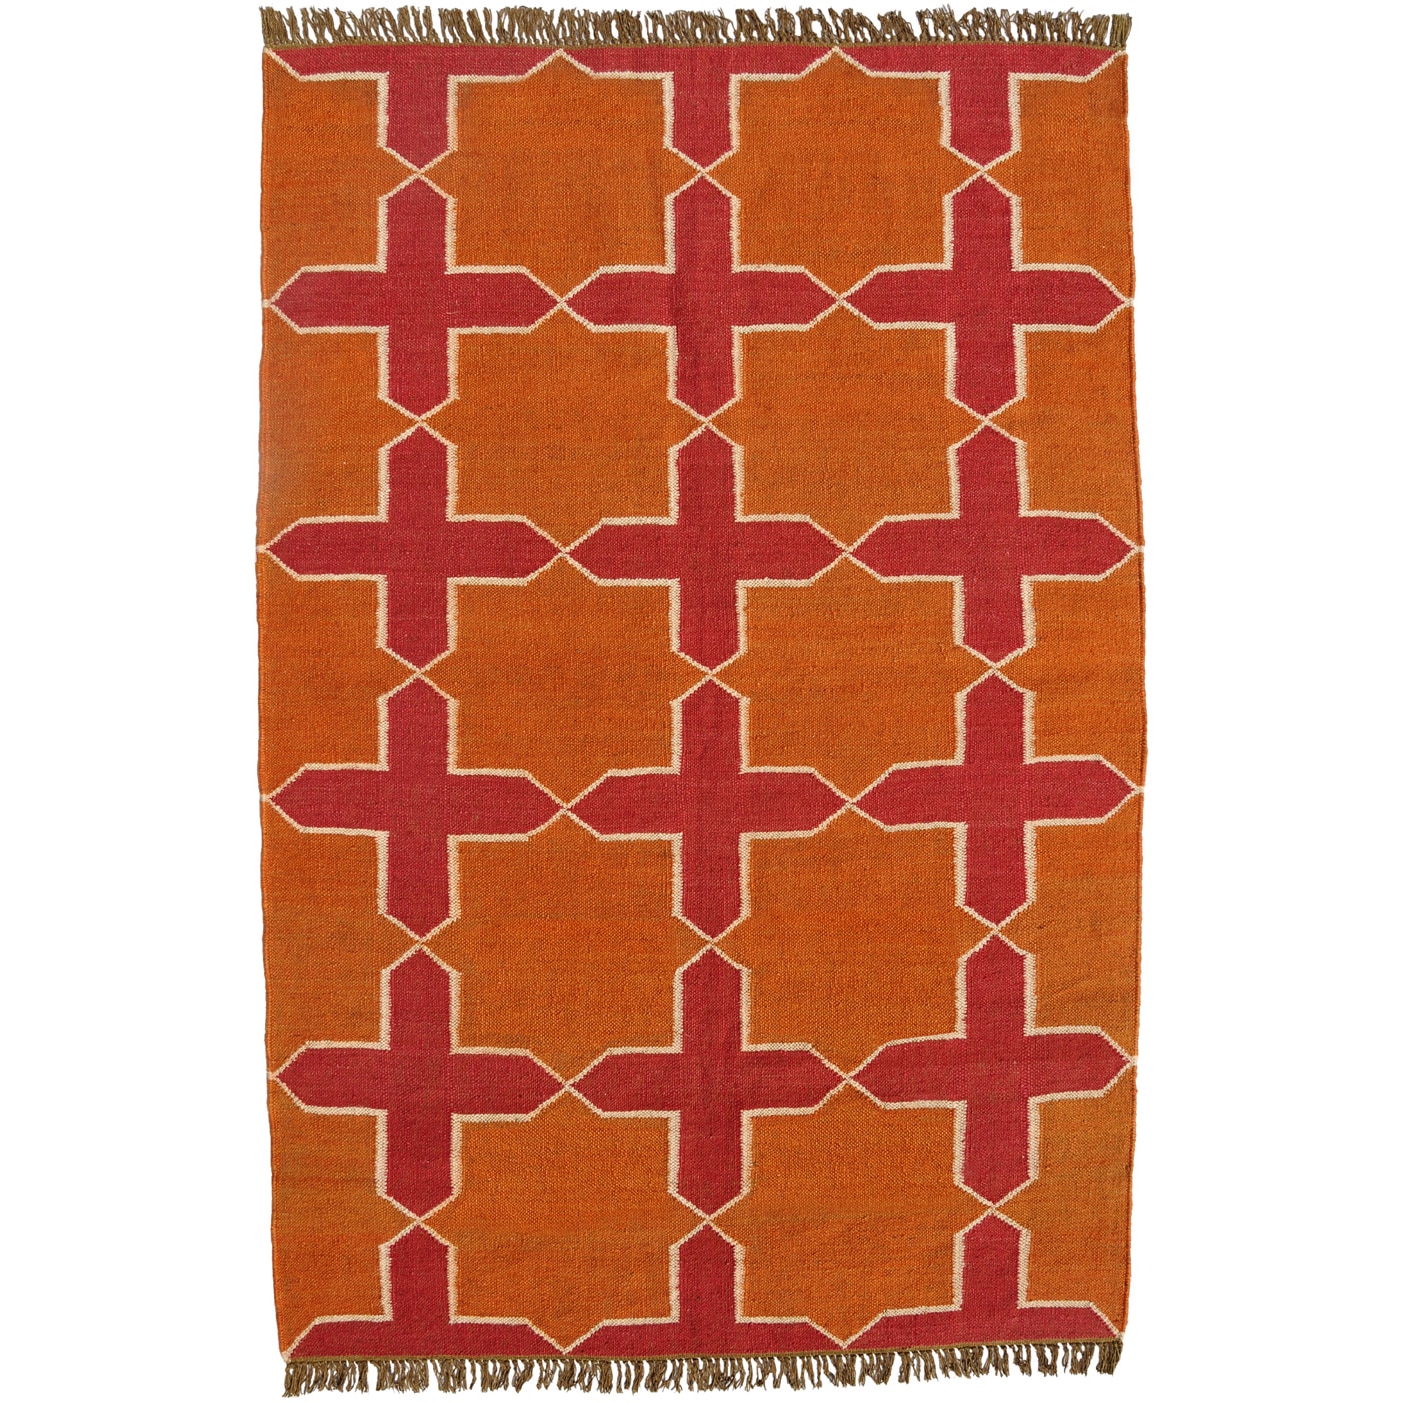 Hand woven Orange Jute/wool Flat Weave Rug (5 X 8)